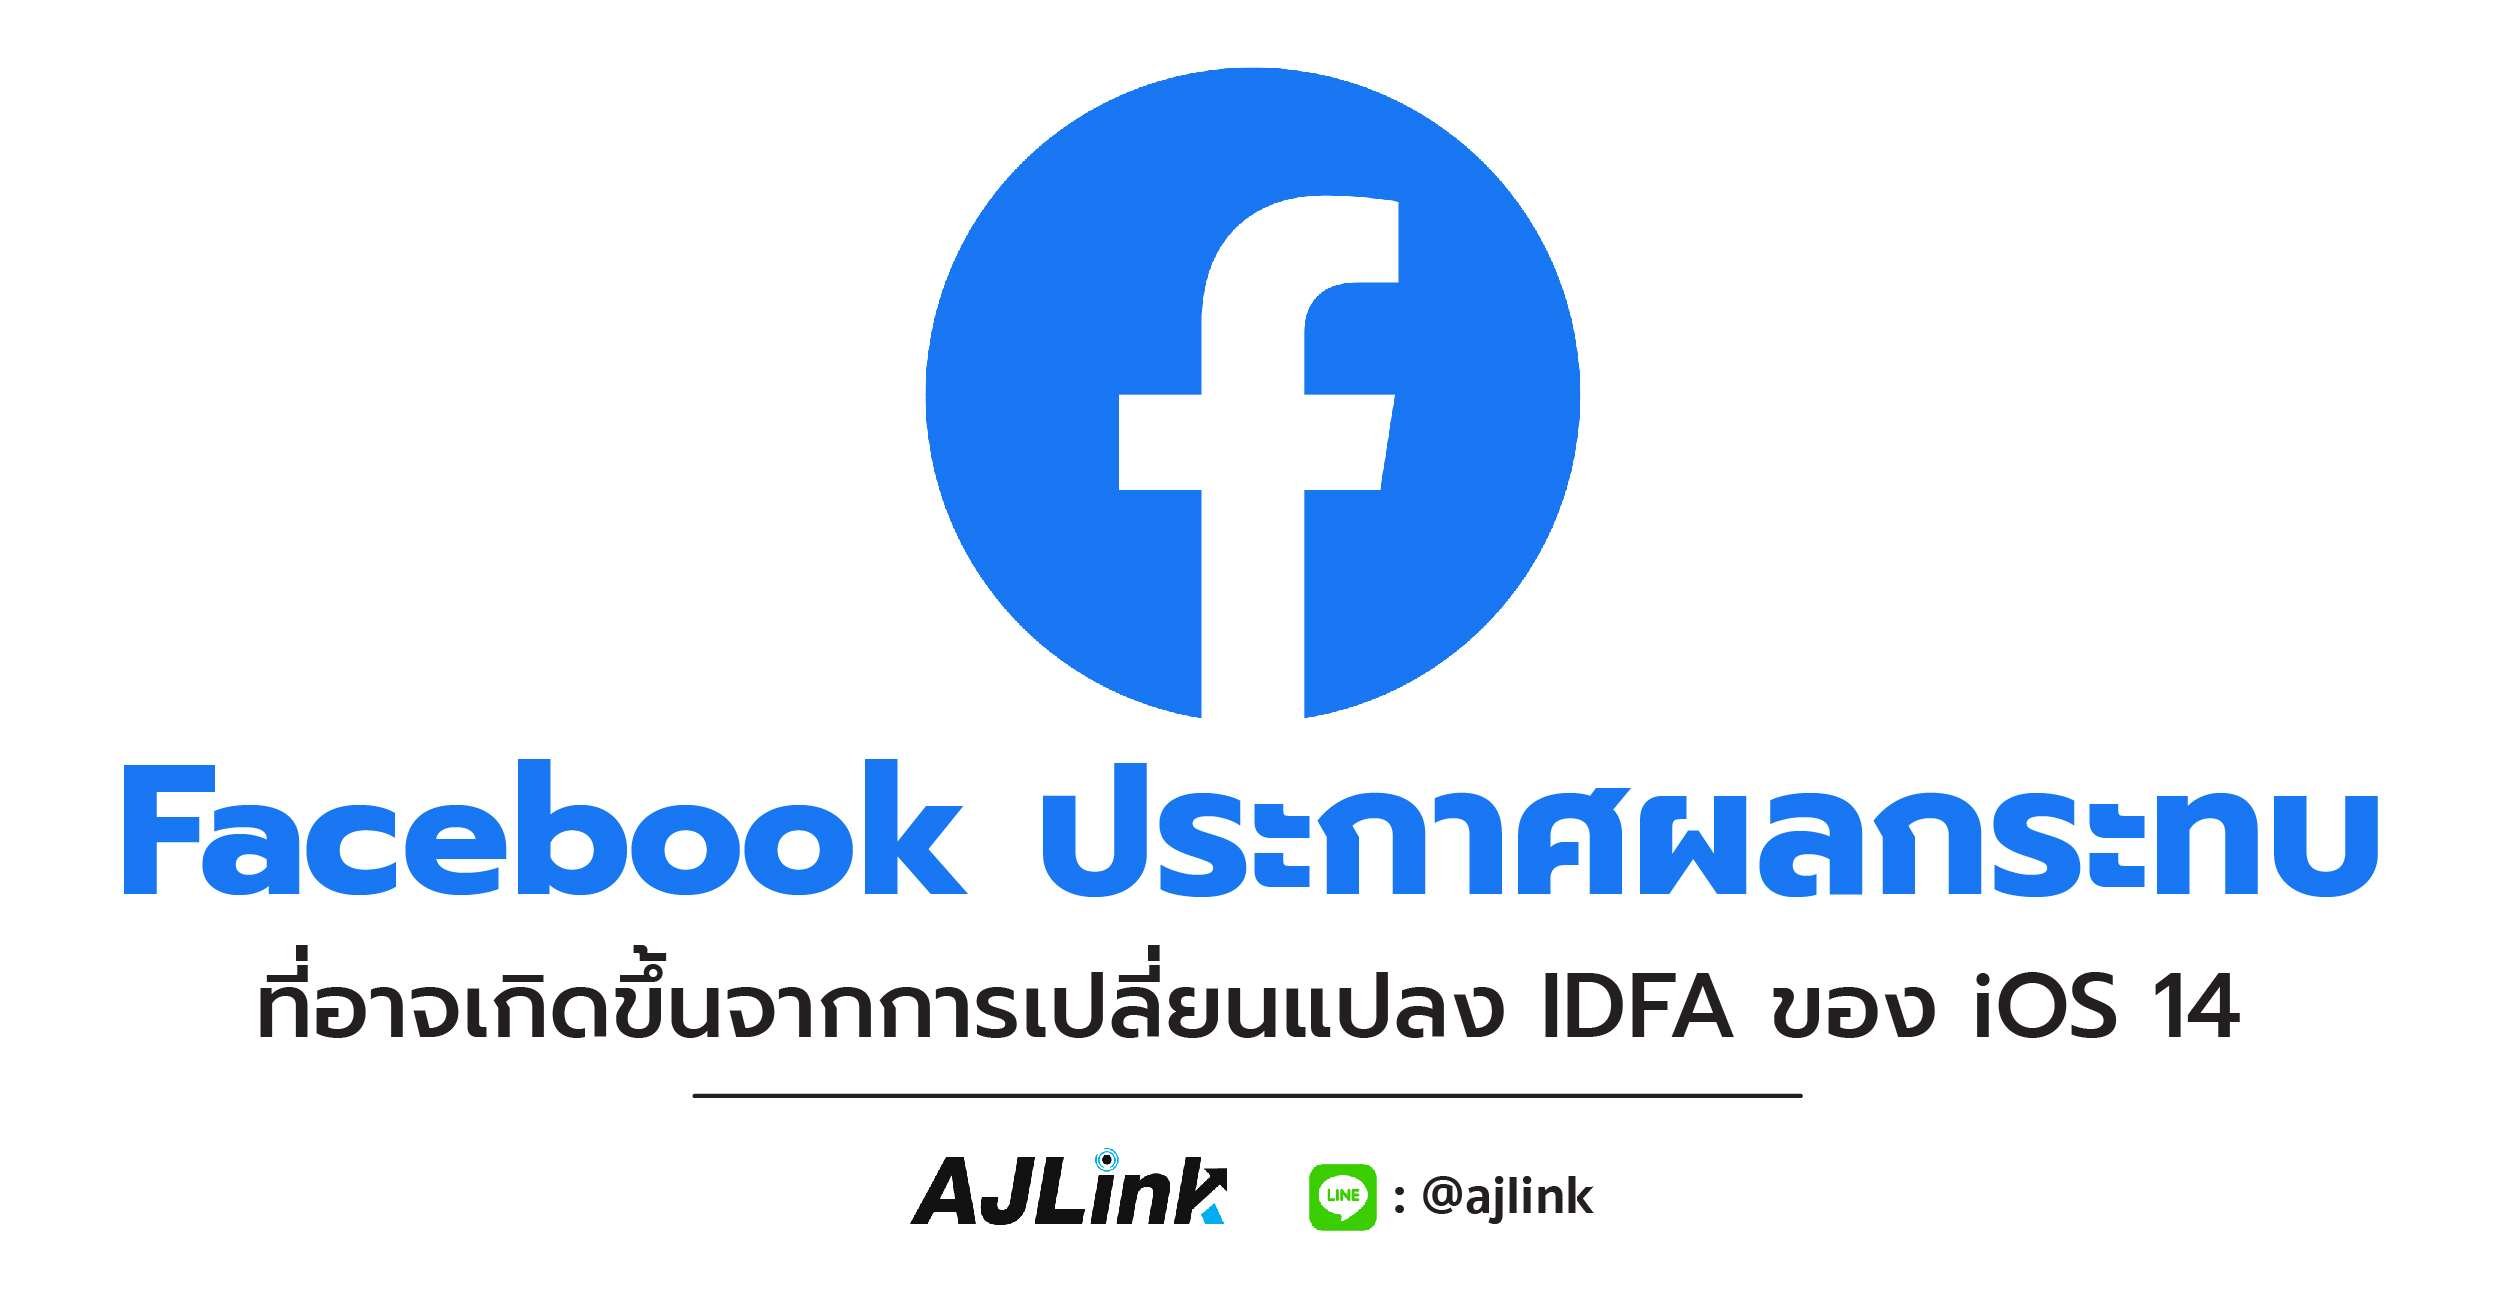 Facebook ประกาศผลกระทบที่อาจเกิดขึ้นจากการเปลี่ยนแปลง IDFA ของ iOS 14